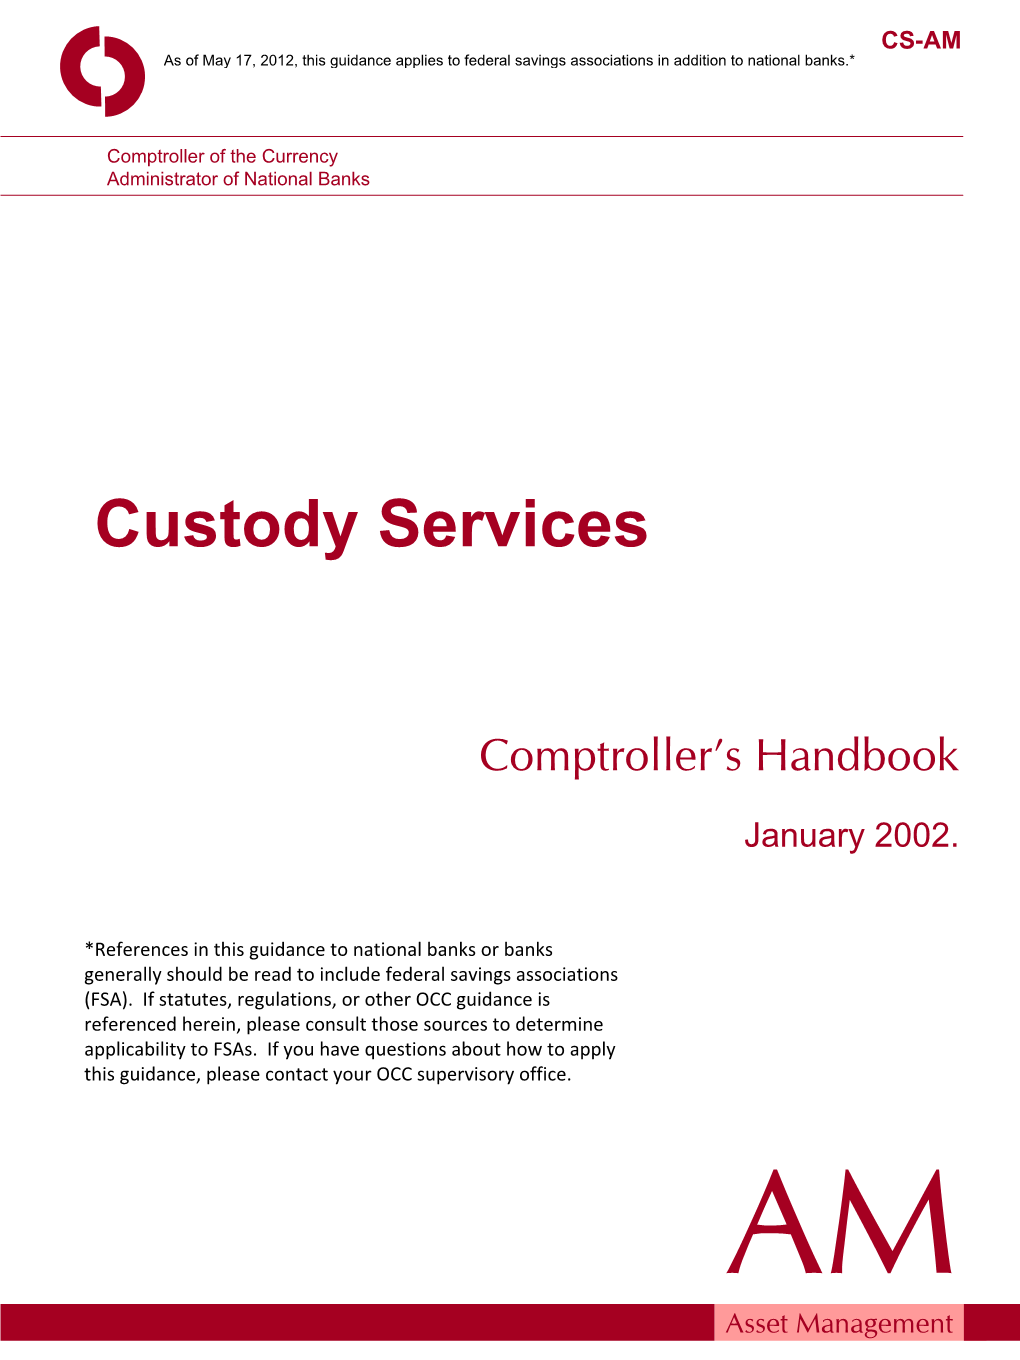 Custody Services Handbook